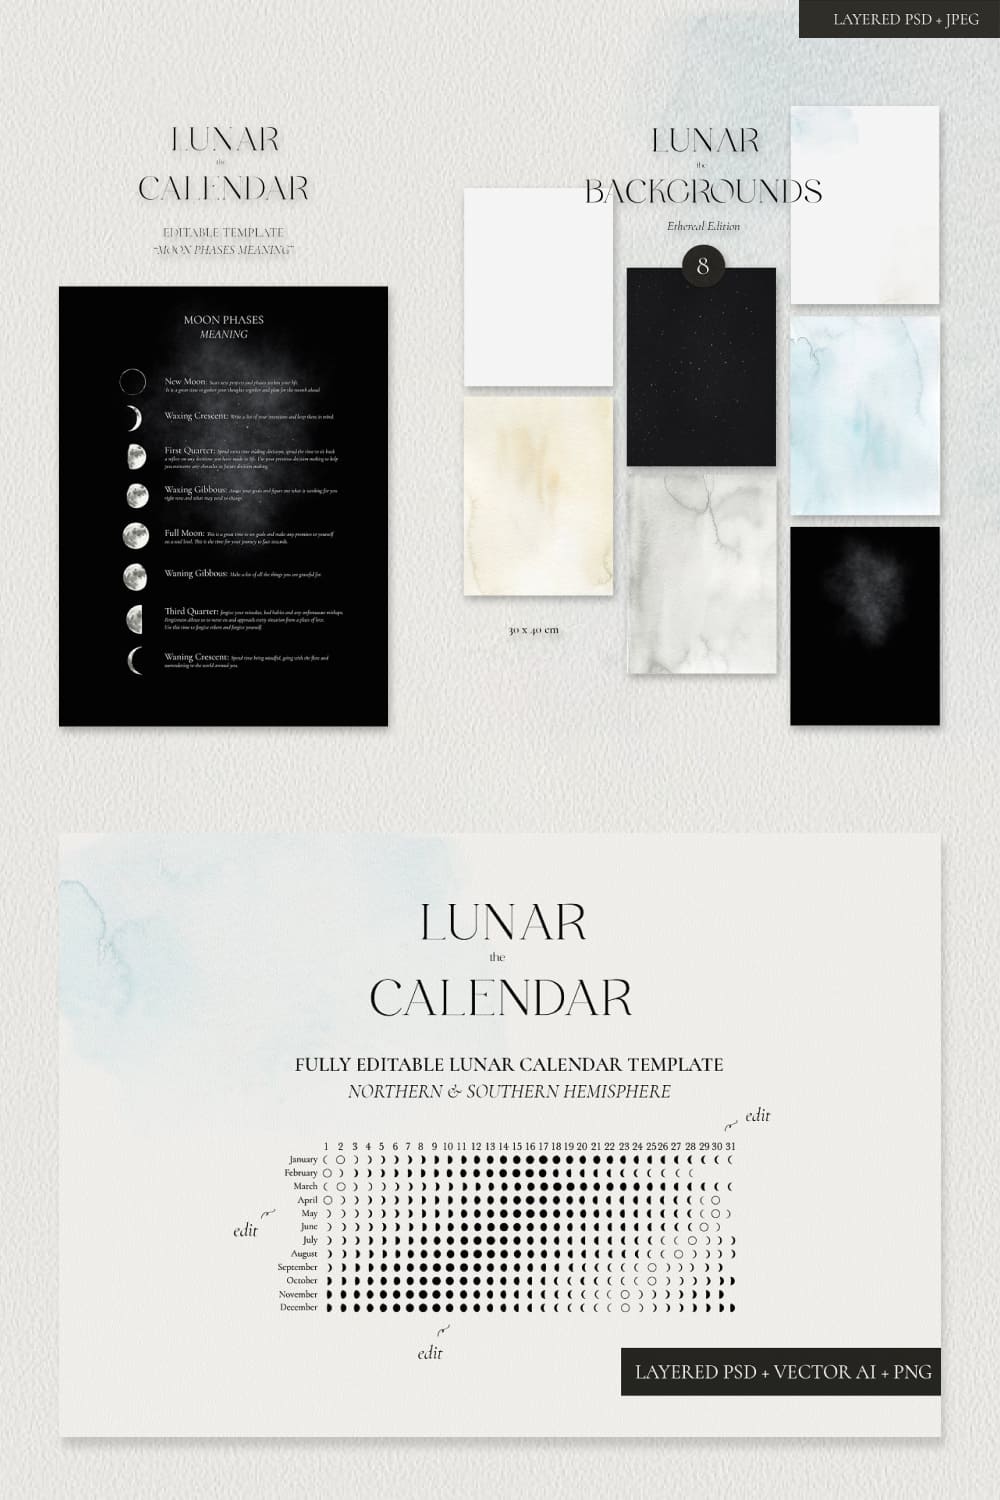 lunar calendar 2022 ethereal edition pinterest image.